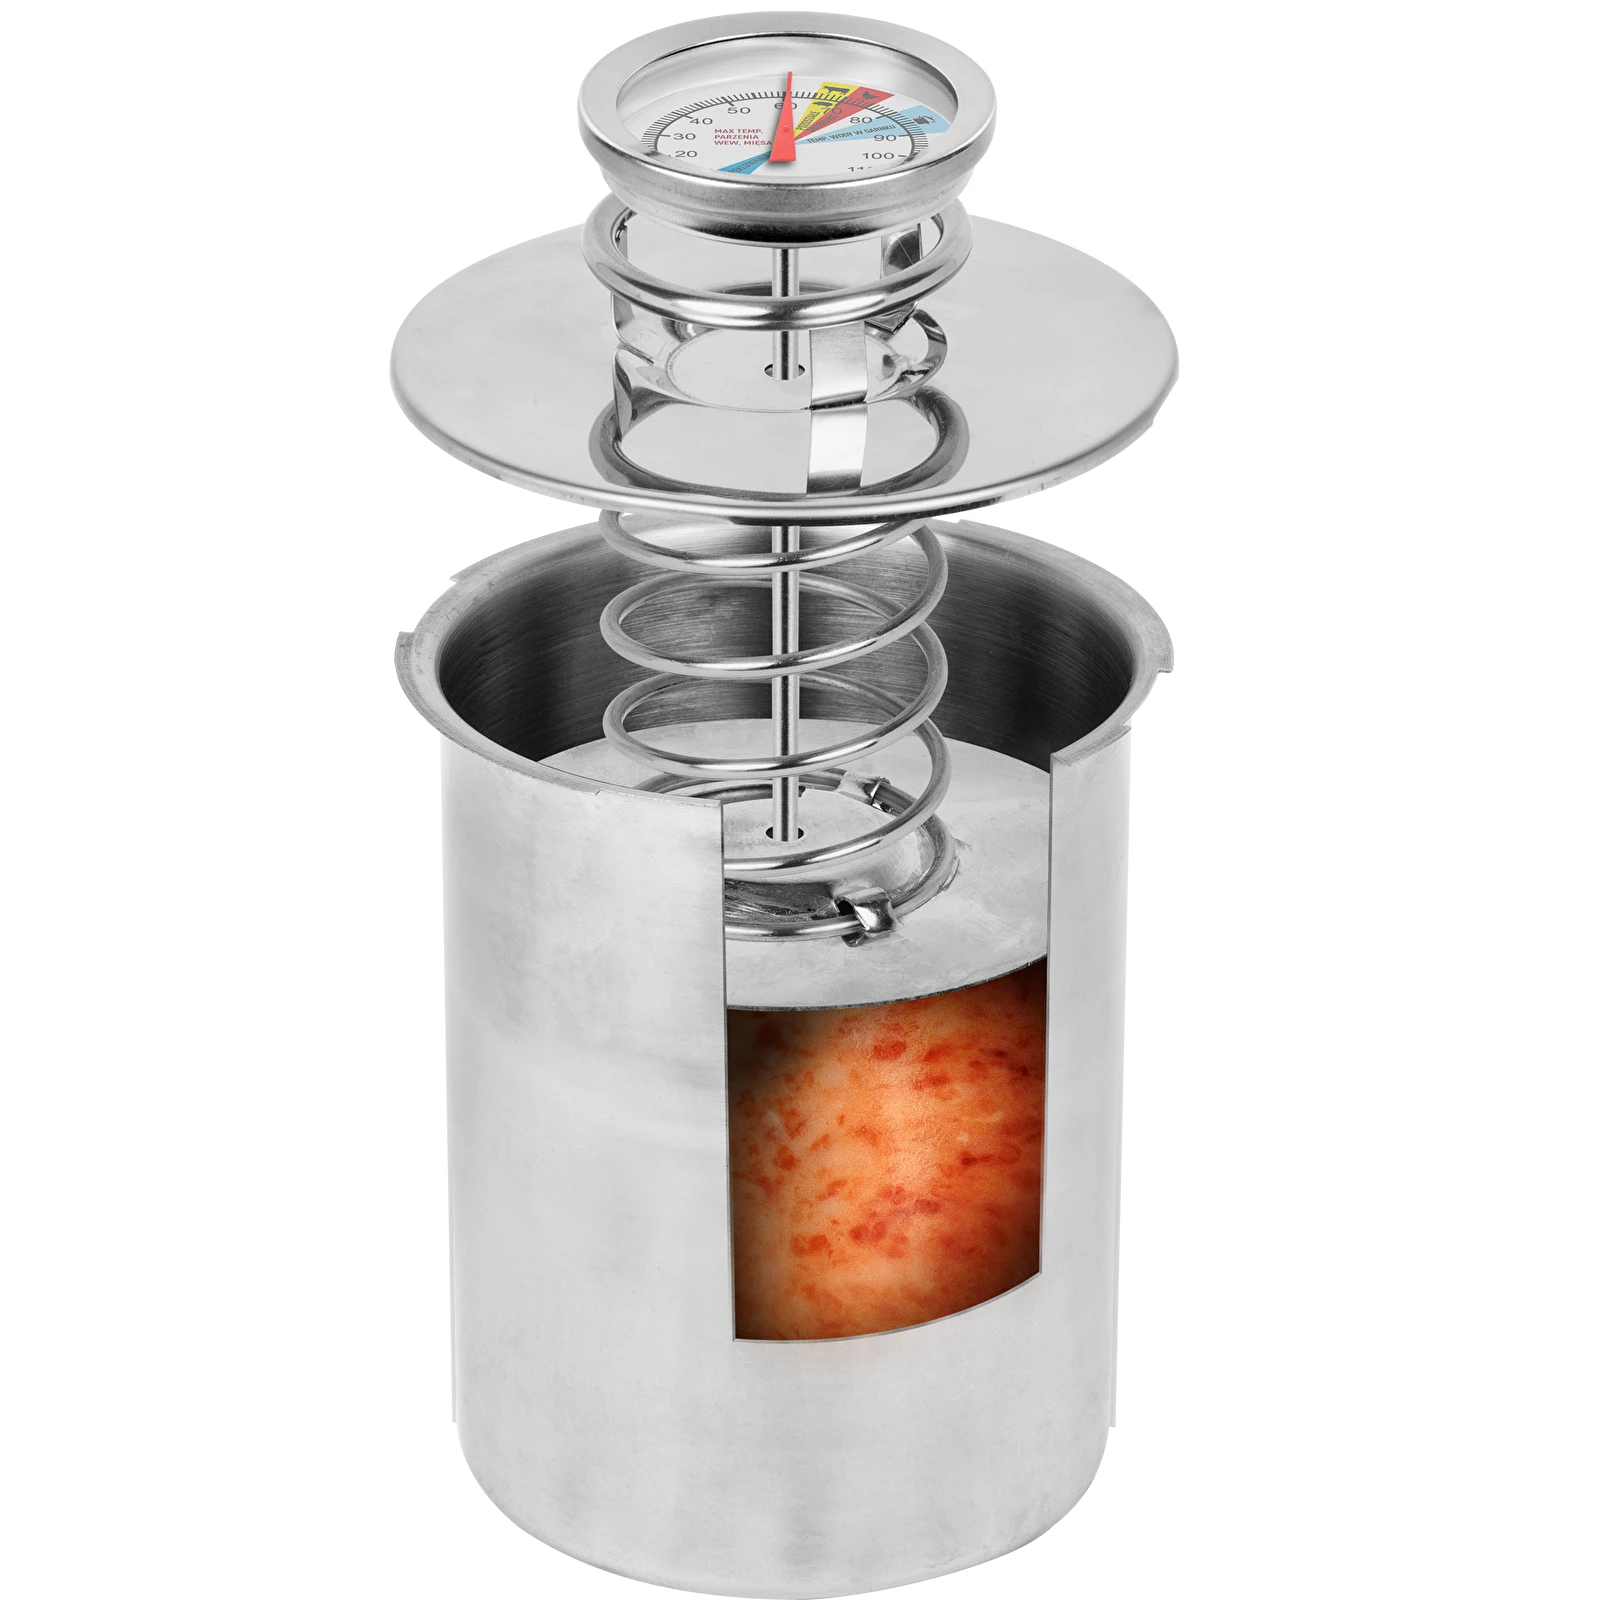 https://browin.com/static/images/1600/thermometer-for-0-8-kg-pressure-ham-cooker-0-120-c-100602_.webp